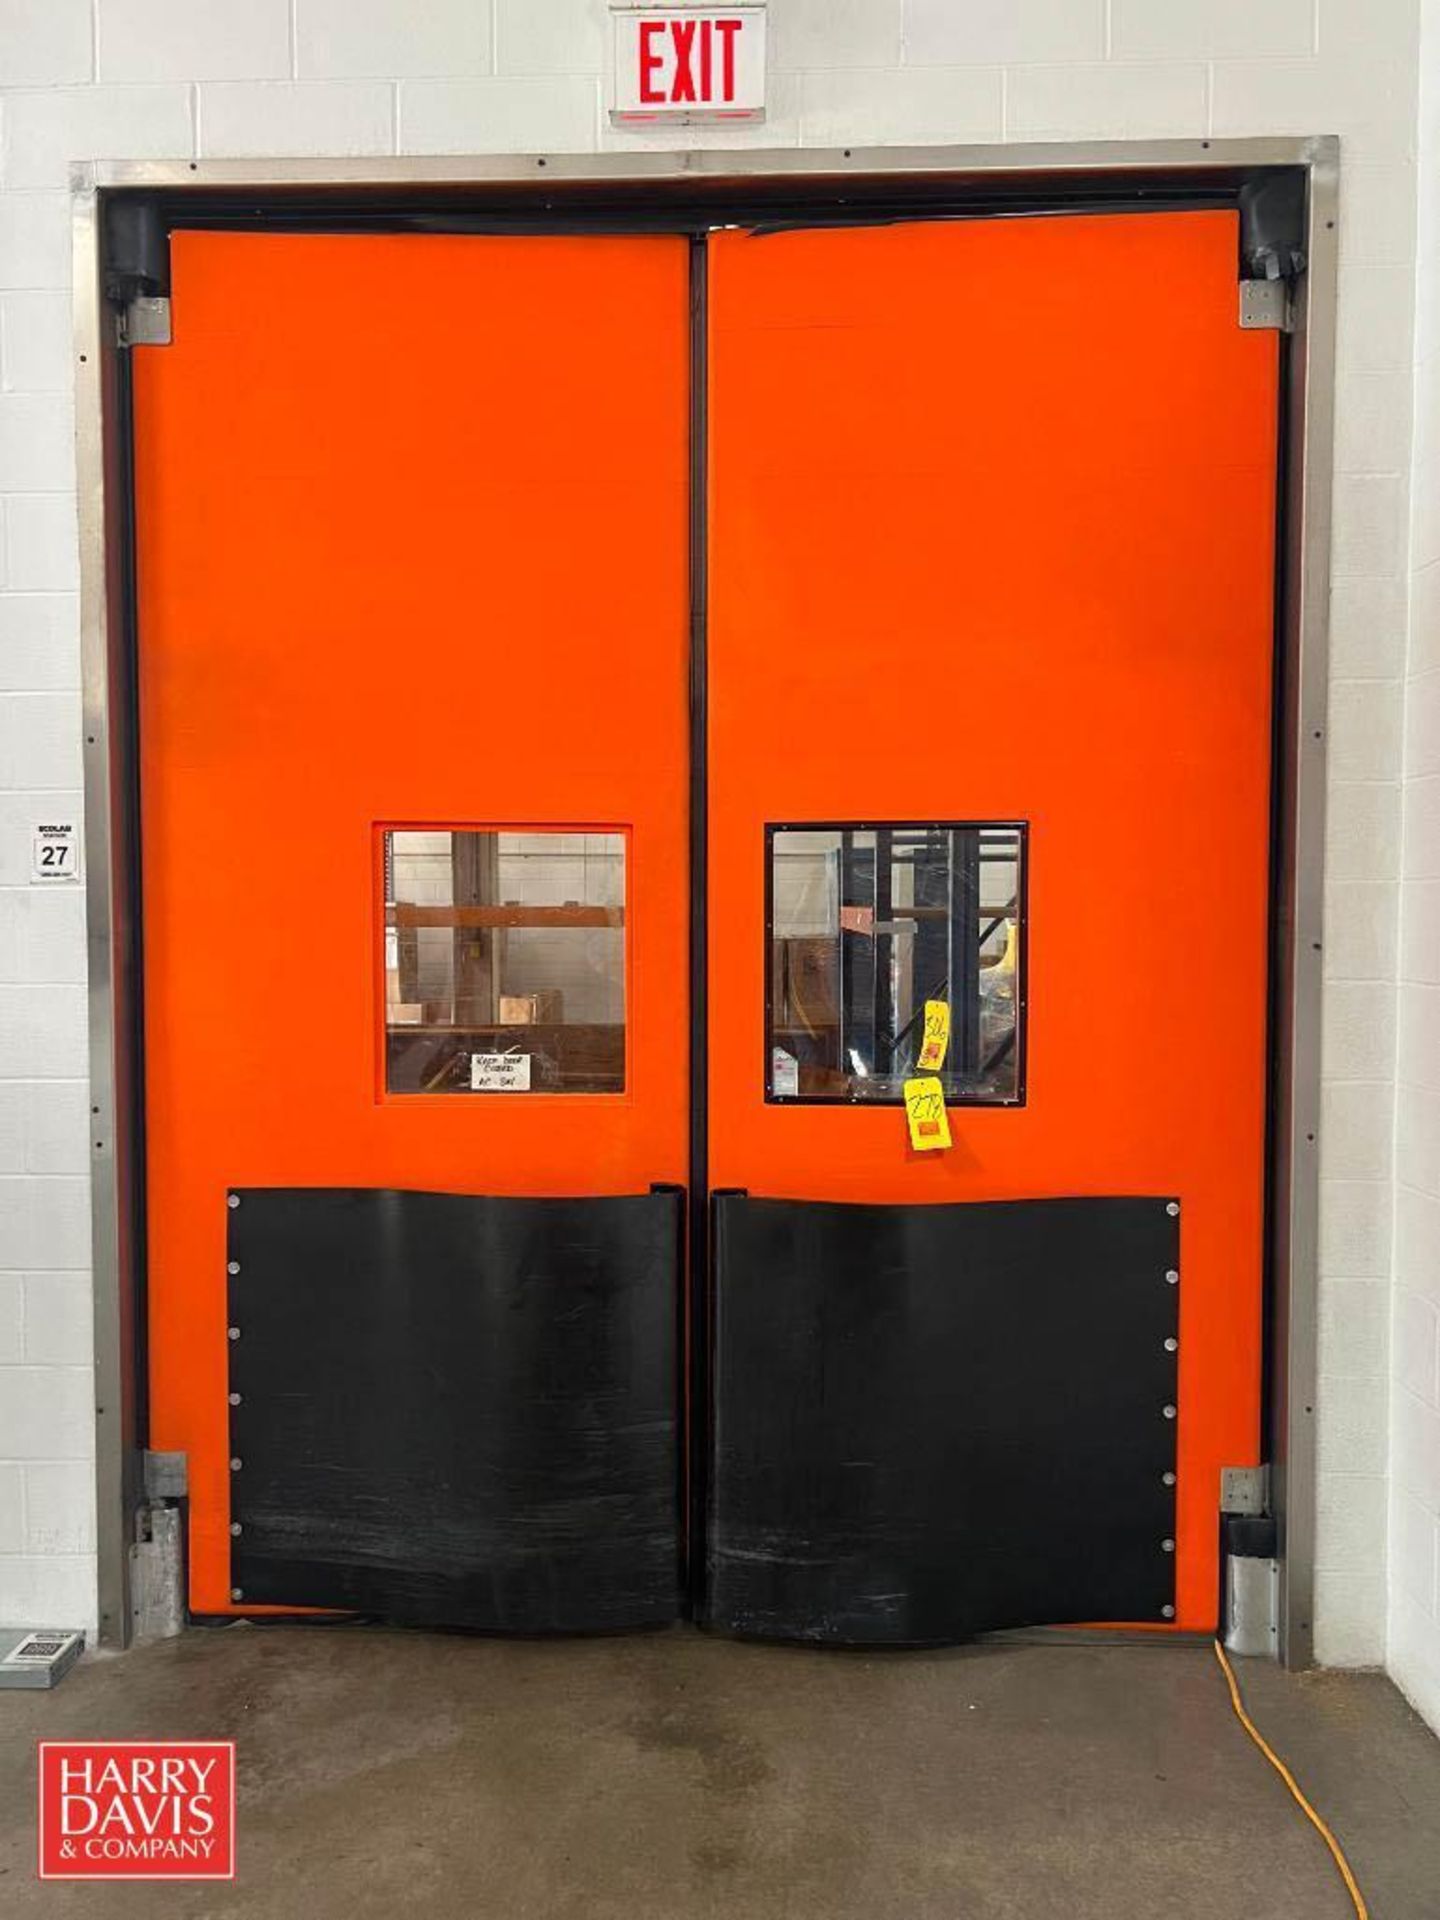 Chase Doors Uralite Bumper Doors, Dimensions = (2) 10' x 4' - Rigging Fee: $250